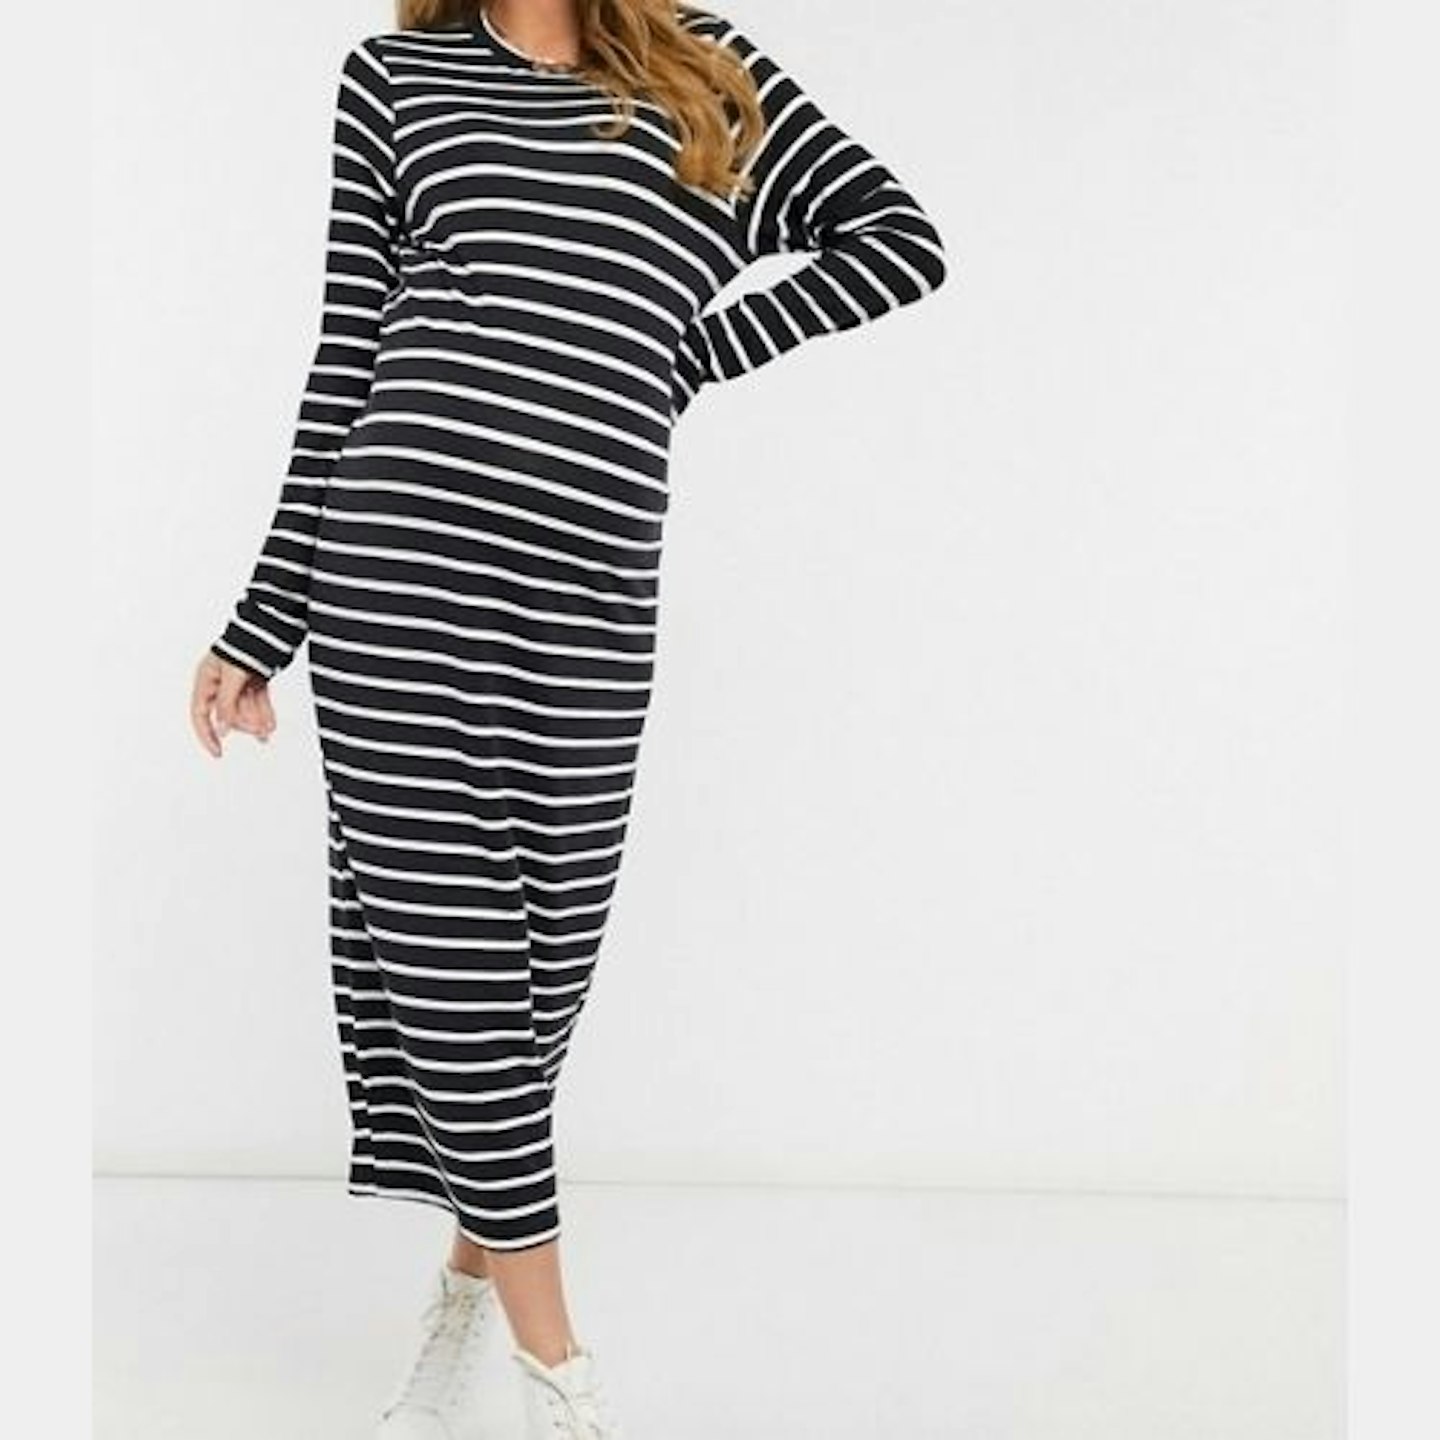 ASOS DESIGN Maternity long sleeve t-shirt midi dress in black and white stripe